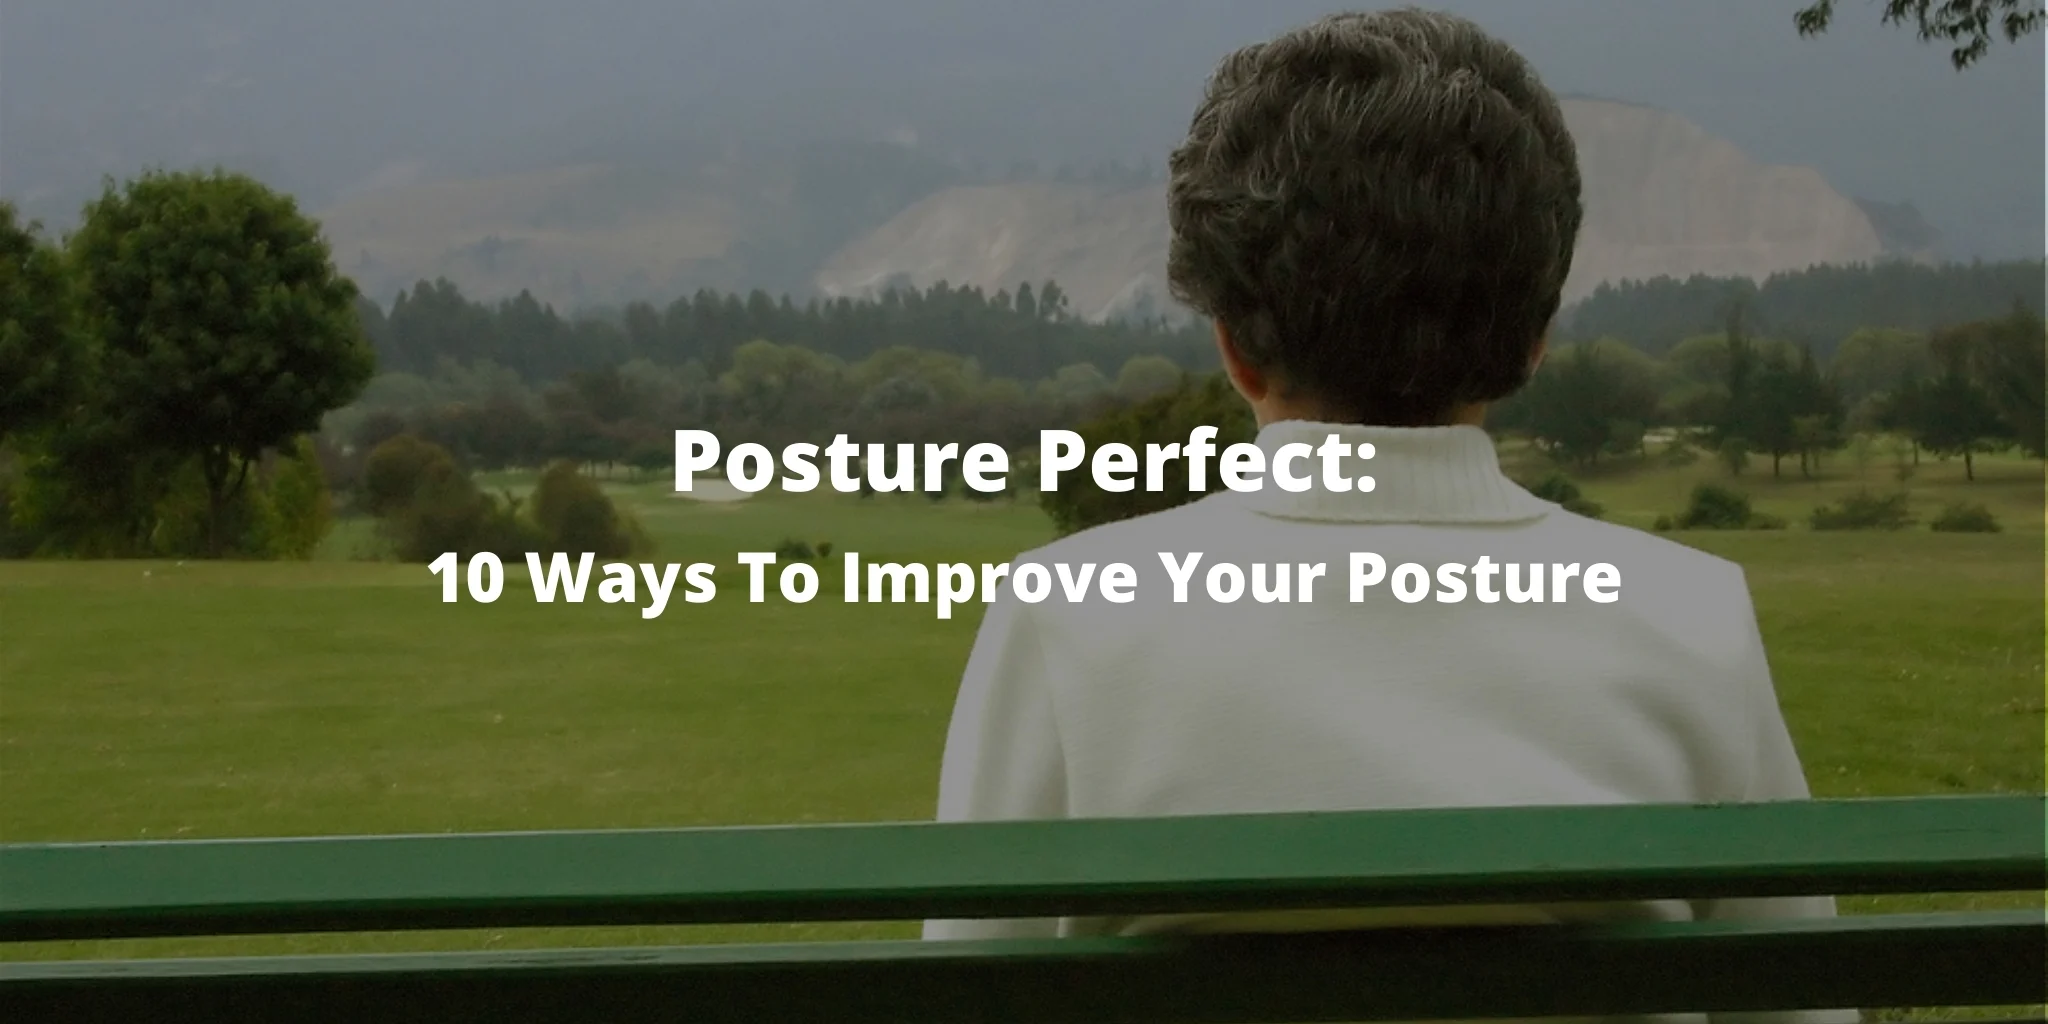 Posture Perfect: 10 Ways To Improve Your Posture